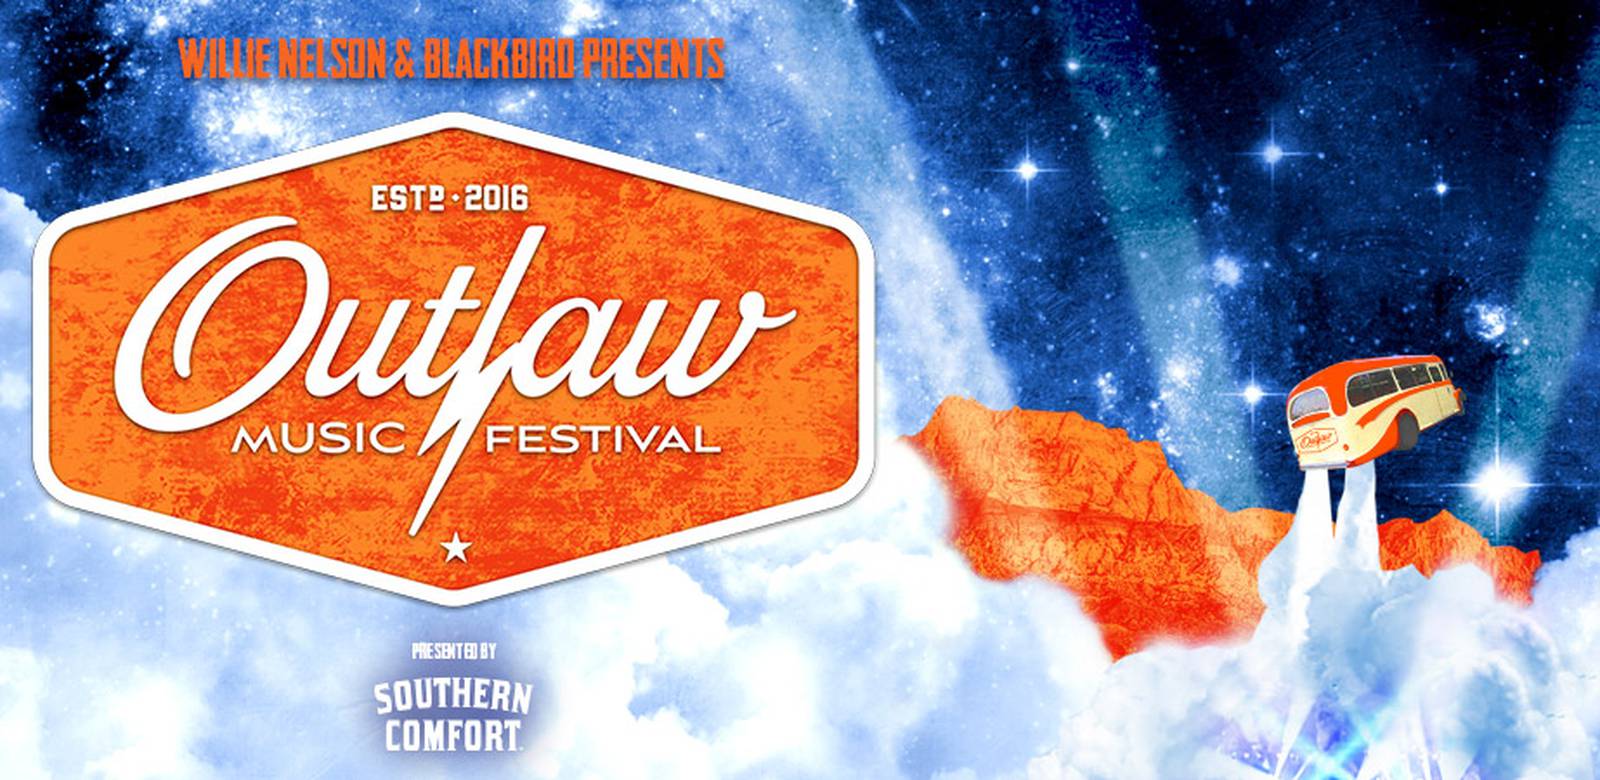 The Outlaw Music Festival is coming ton Cincinnati K99.1FM